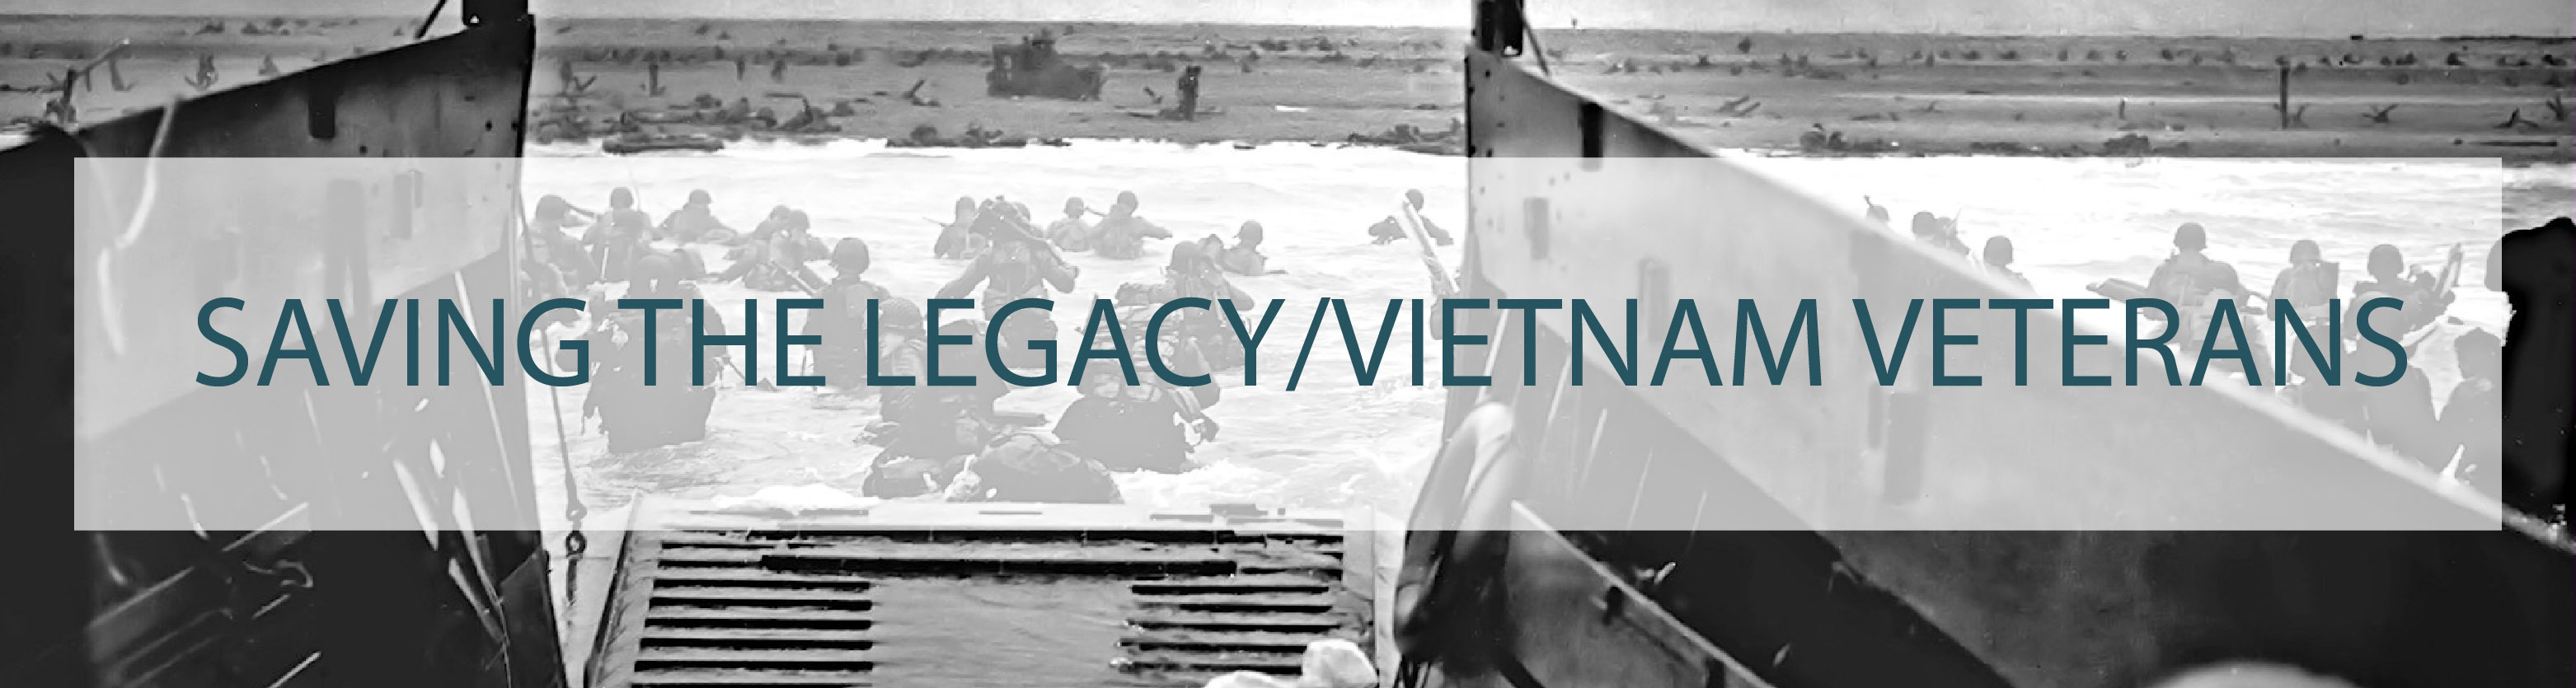 Saving the Legacy / Vietnam Veterans